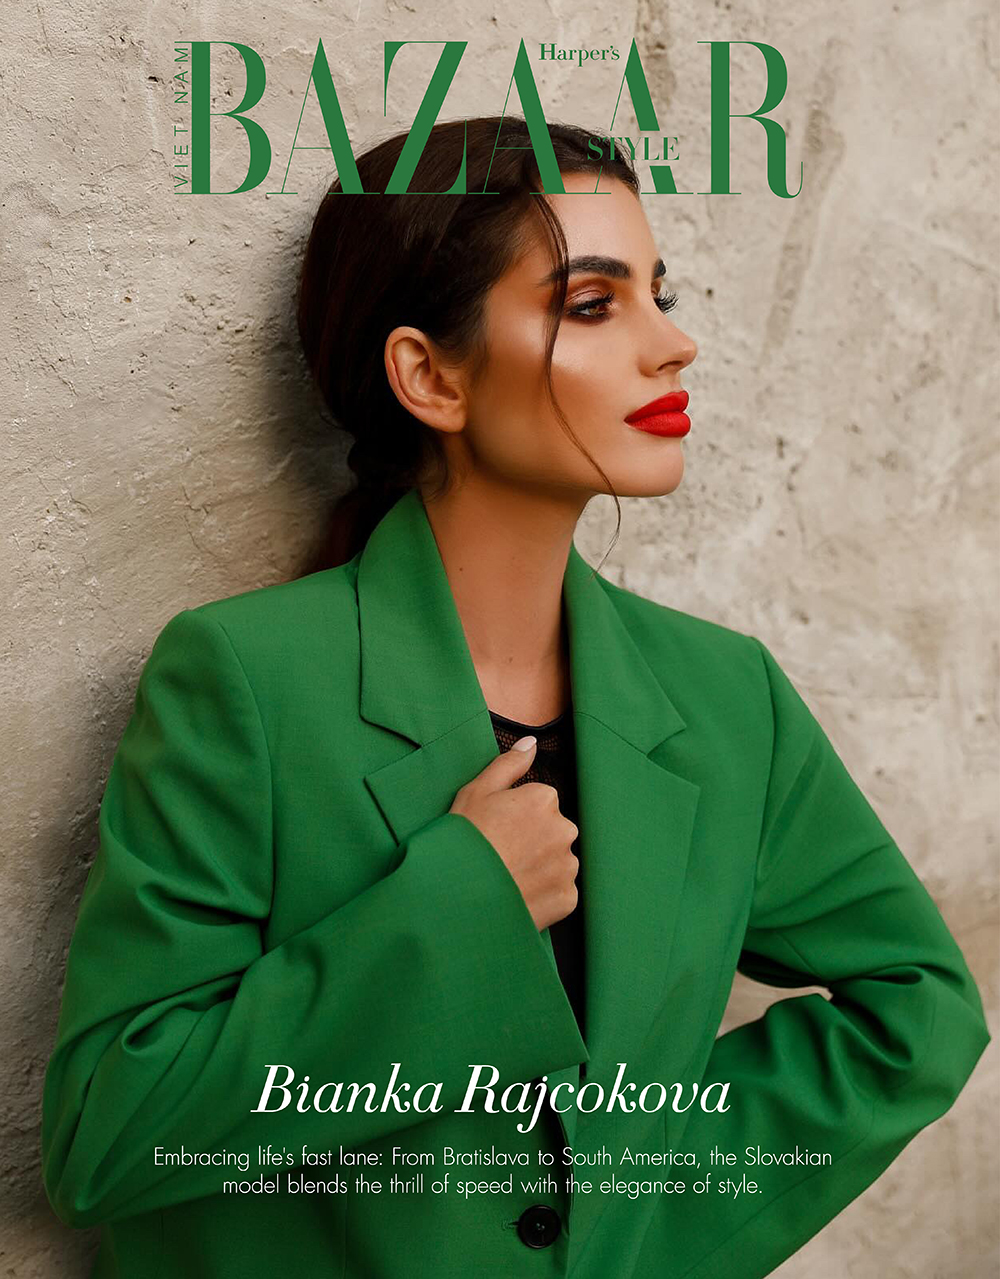 Bianka Rajcokova, a passion for elegance, adrenaline, and artistry 1